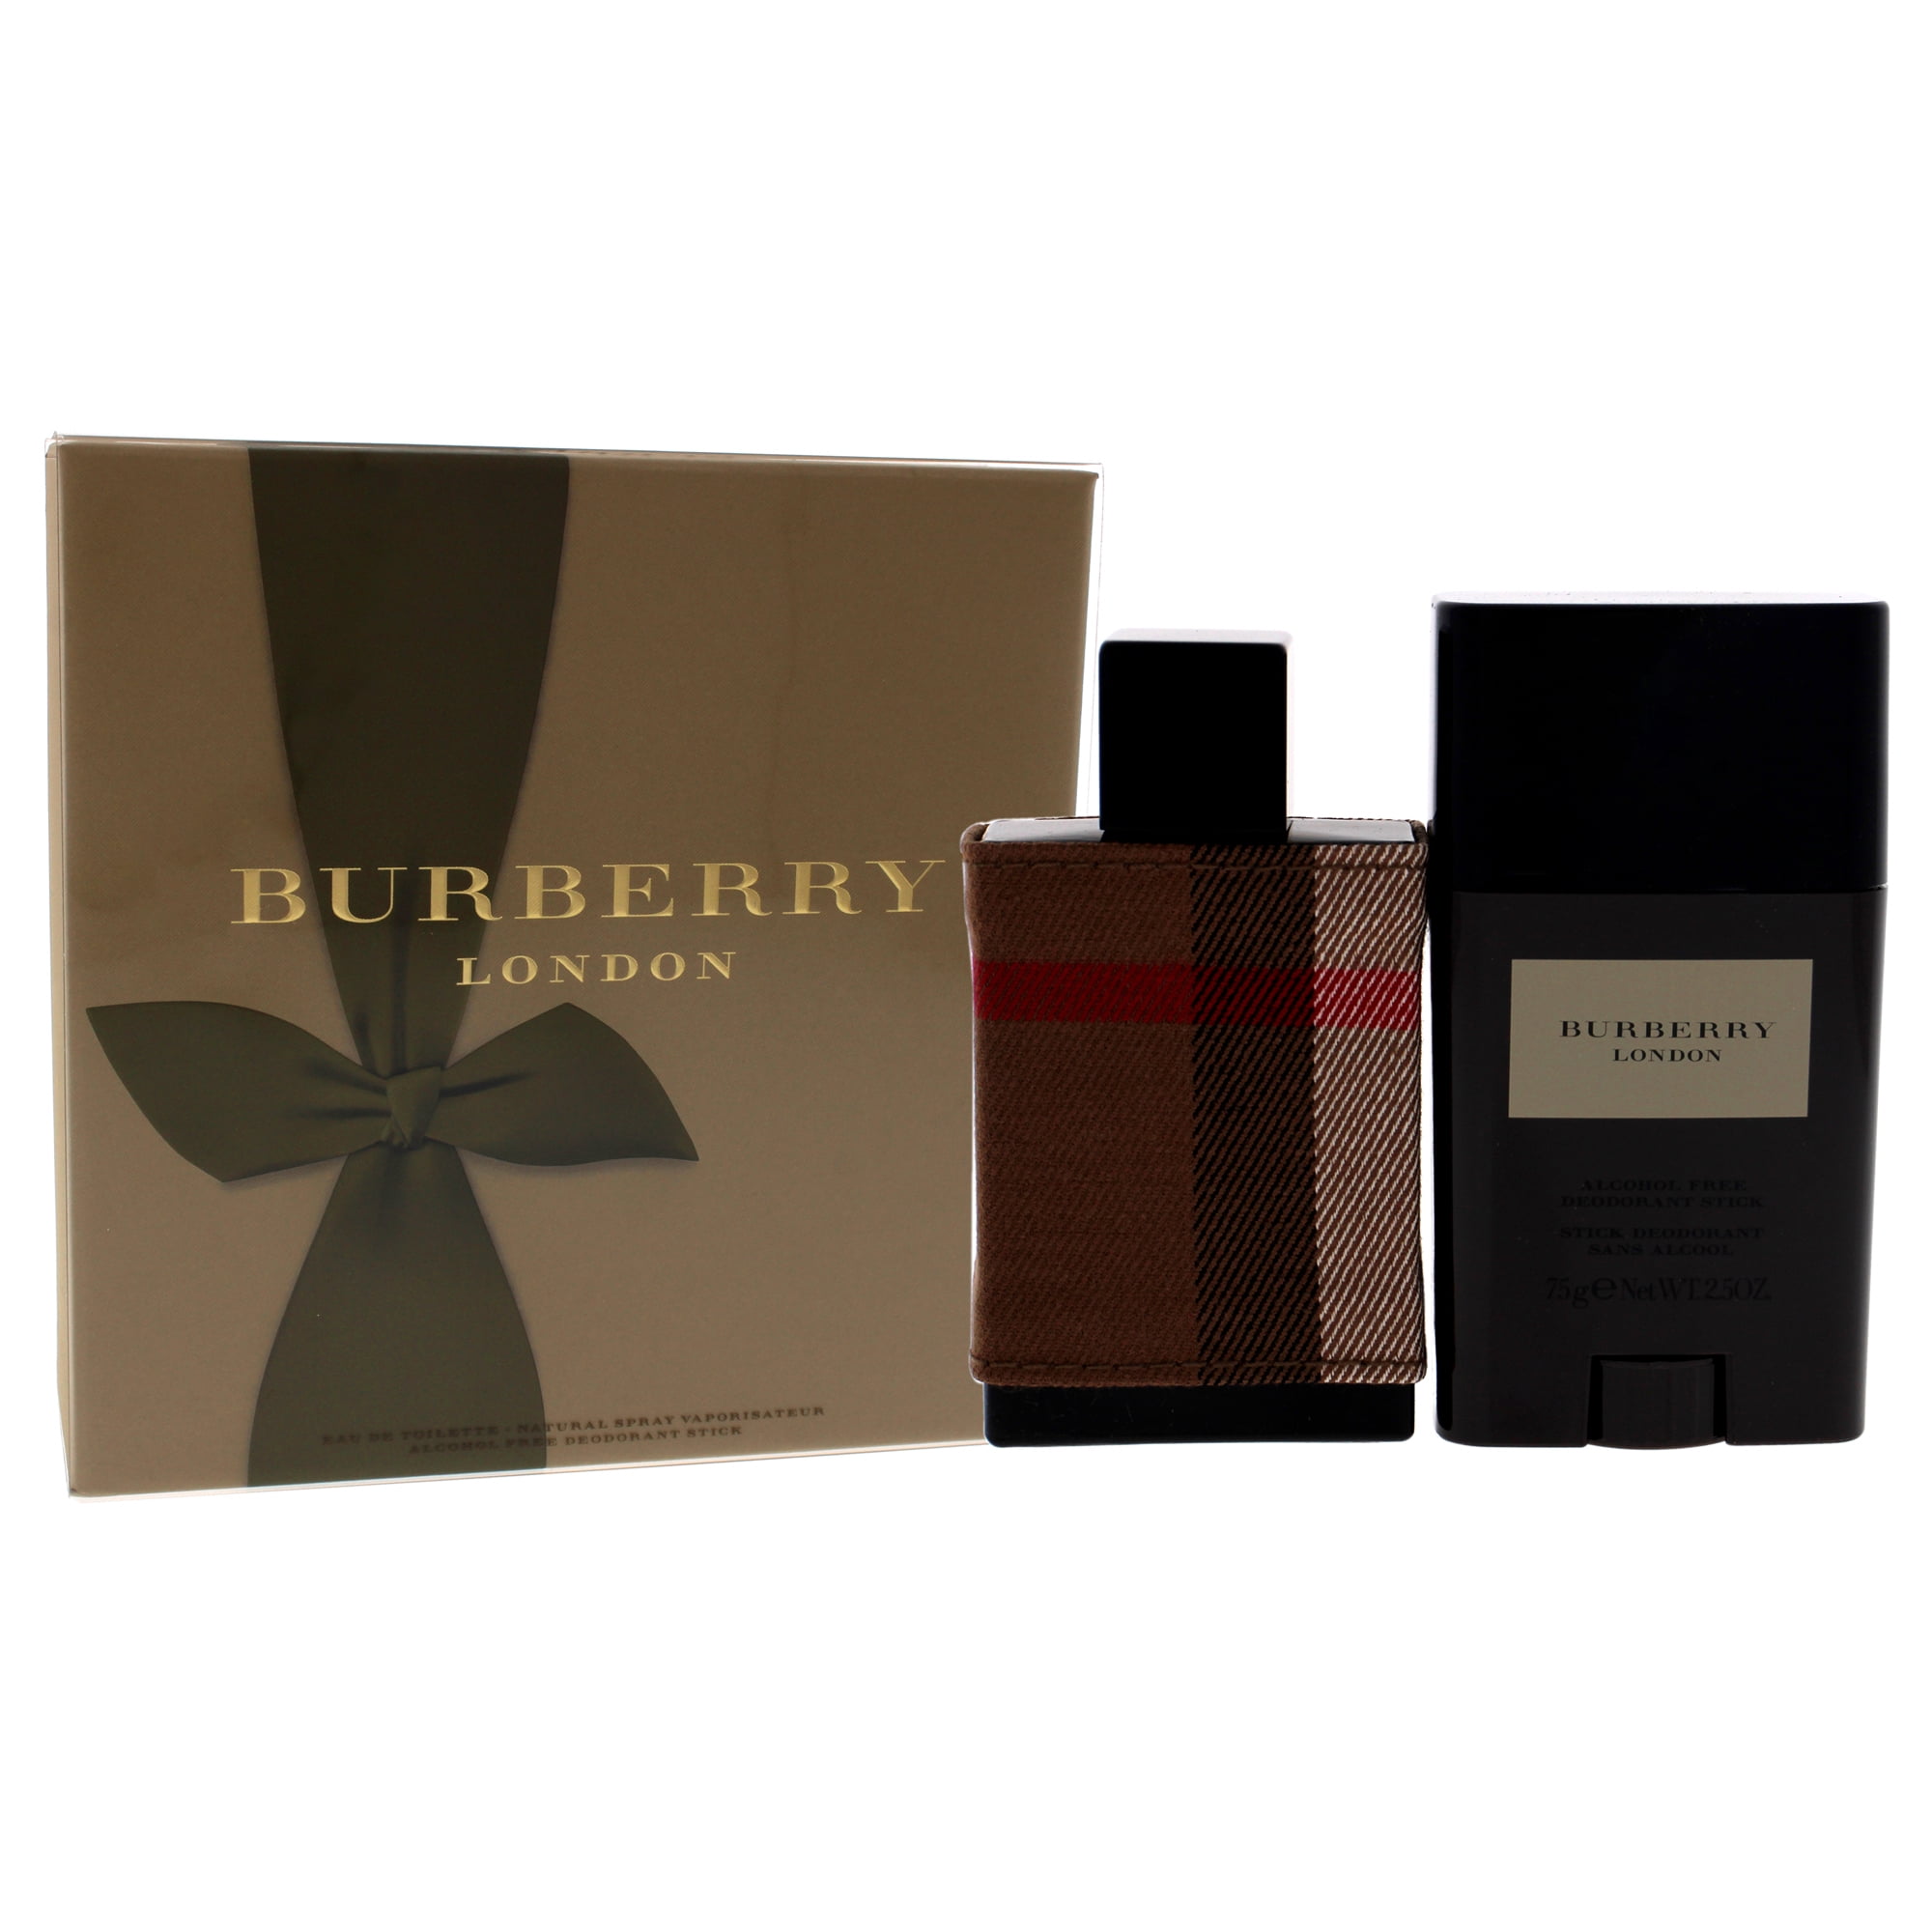 burberry men's cologne gift sets